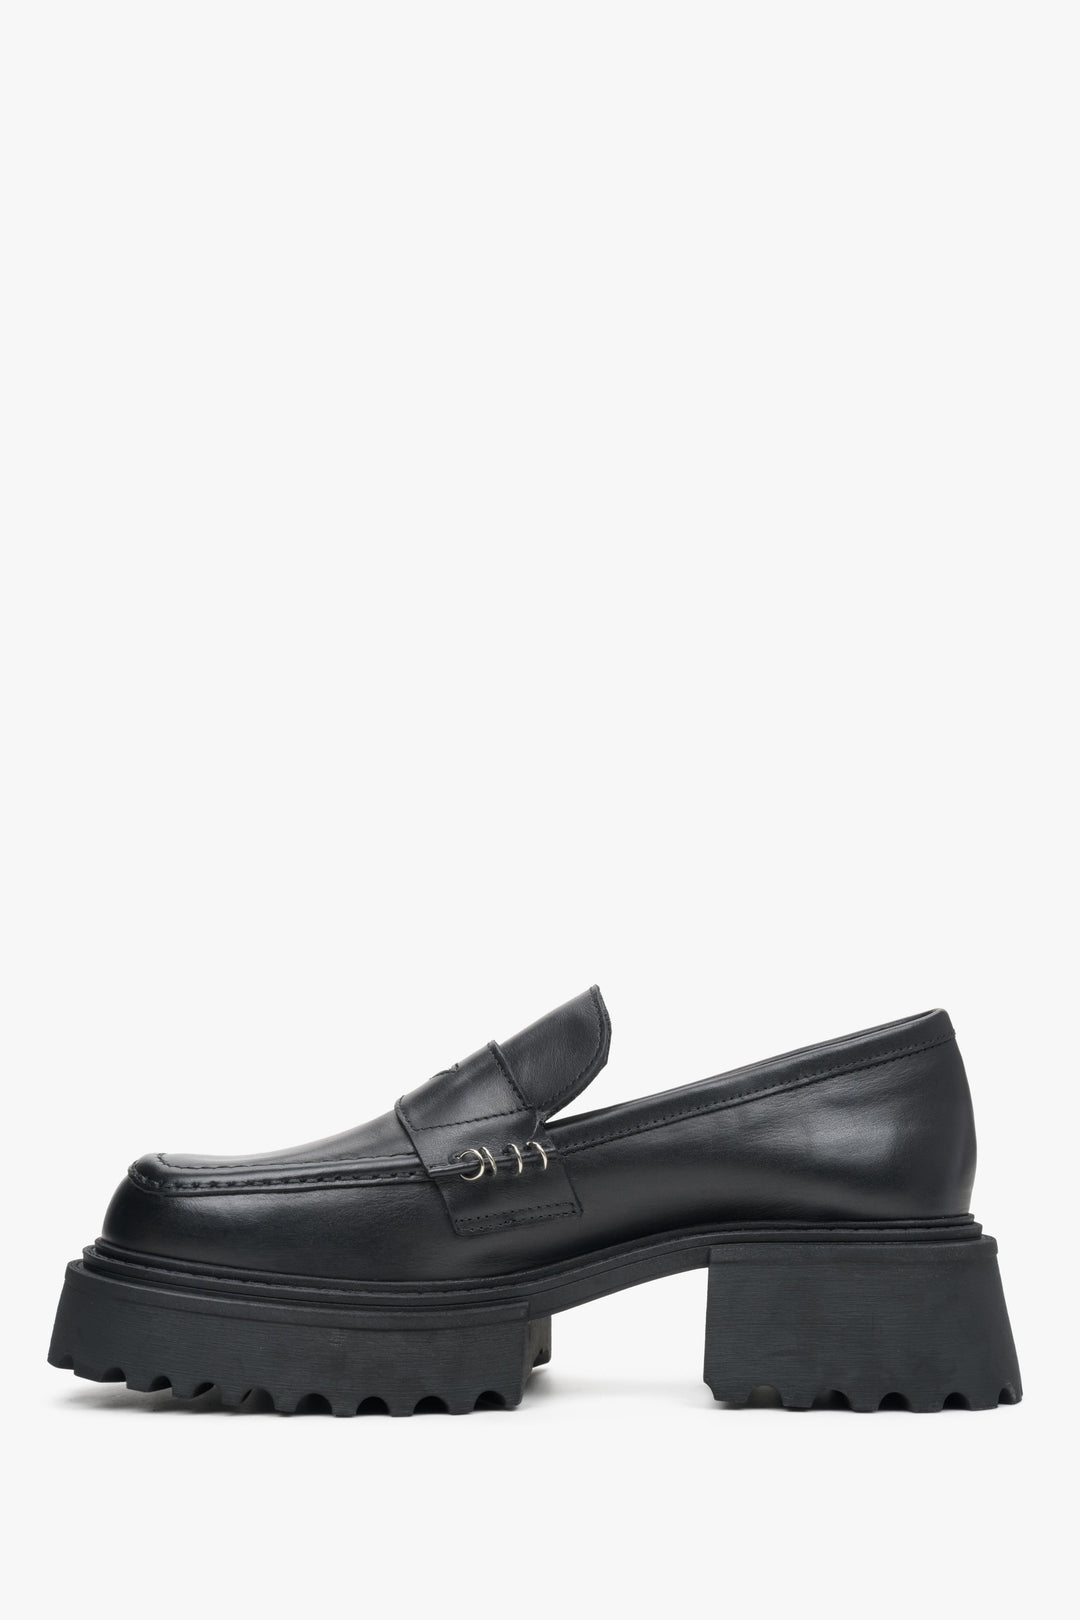 Women's black Estro moccasins made of genuine leather - shoe profile.